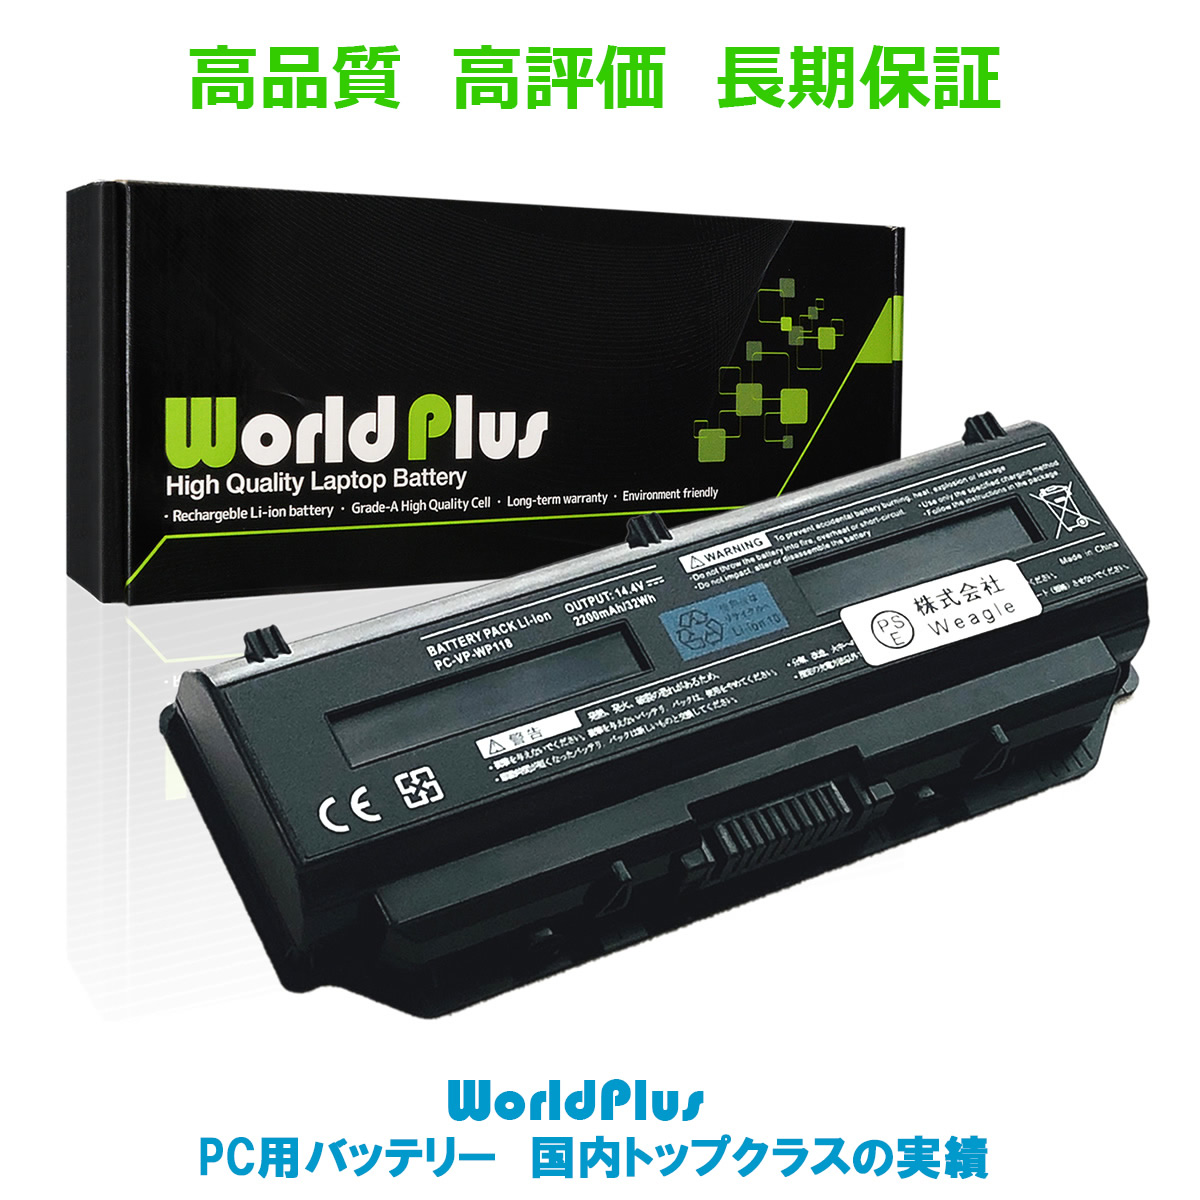 WorldPlus 互換バッテリー PC-VP-WP118 交換用 NEC Lavie L   Gタイプ L シリーズ対応